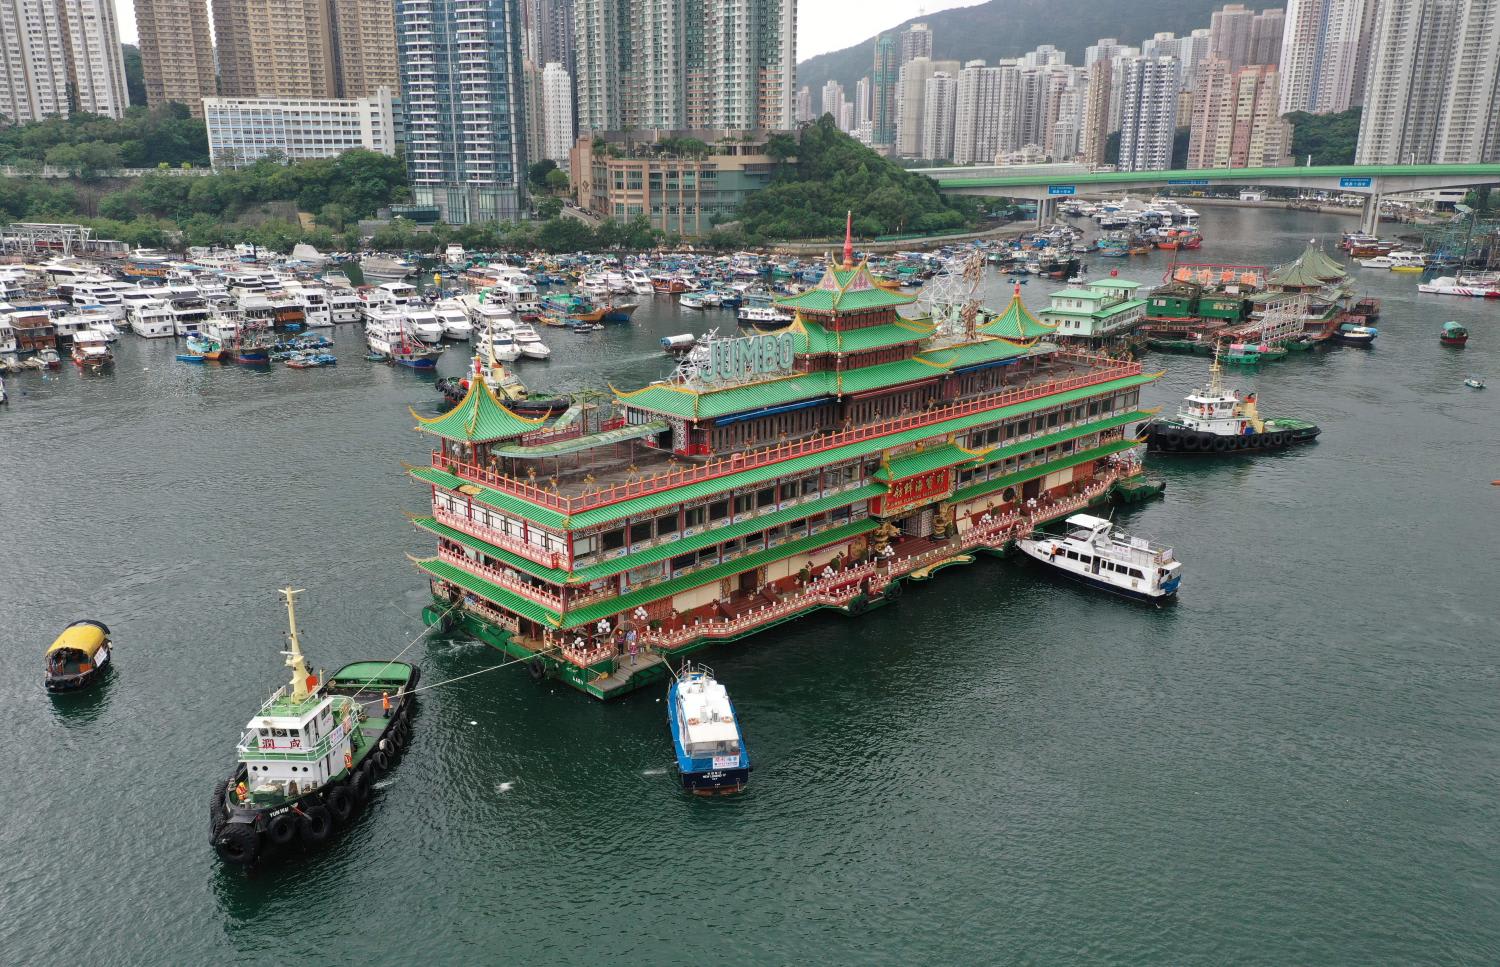 Hong Kong's famed Jumbo Floating Restaurant sinks in South China Sea